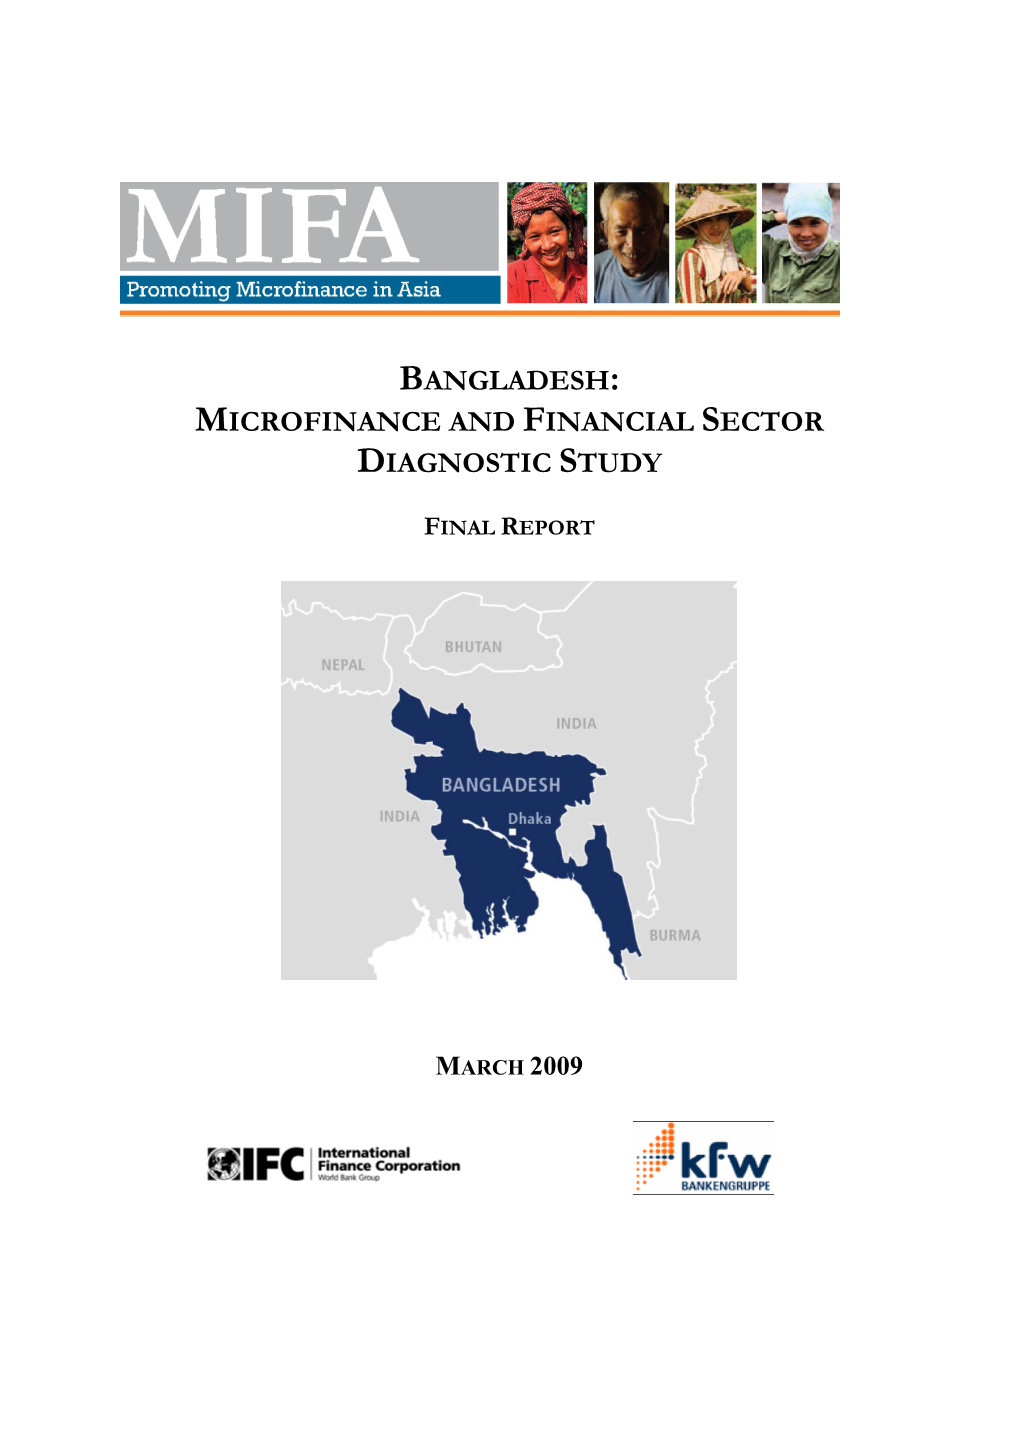 Bangladesh: Microfinance and Financial Sector Diagnostic Study